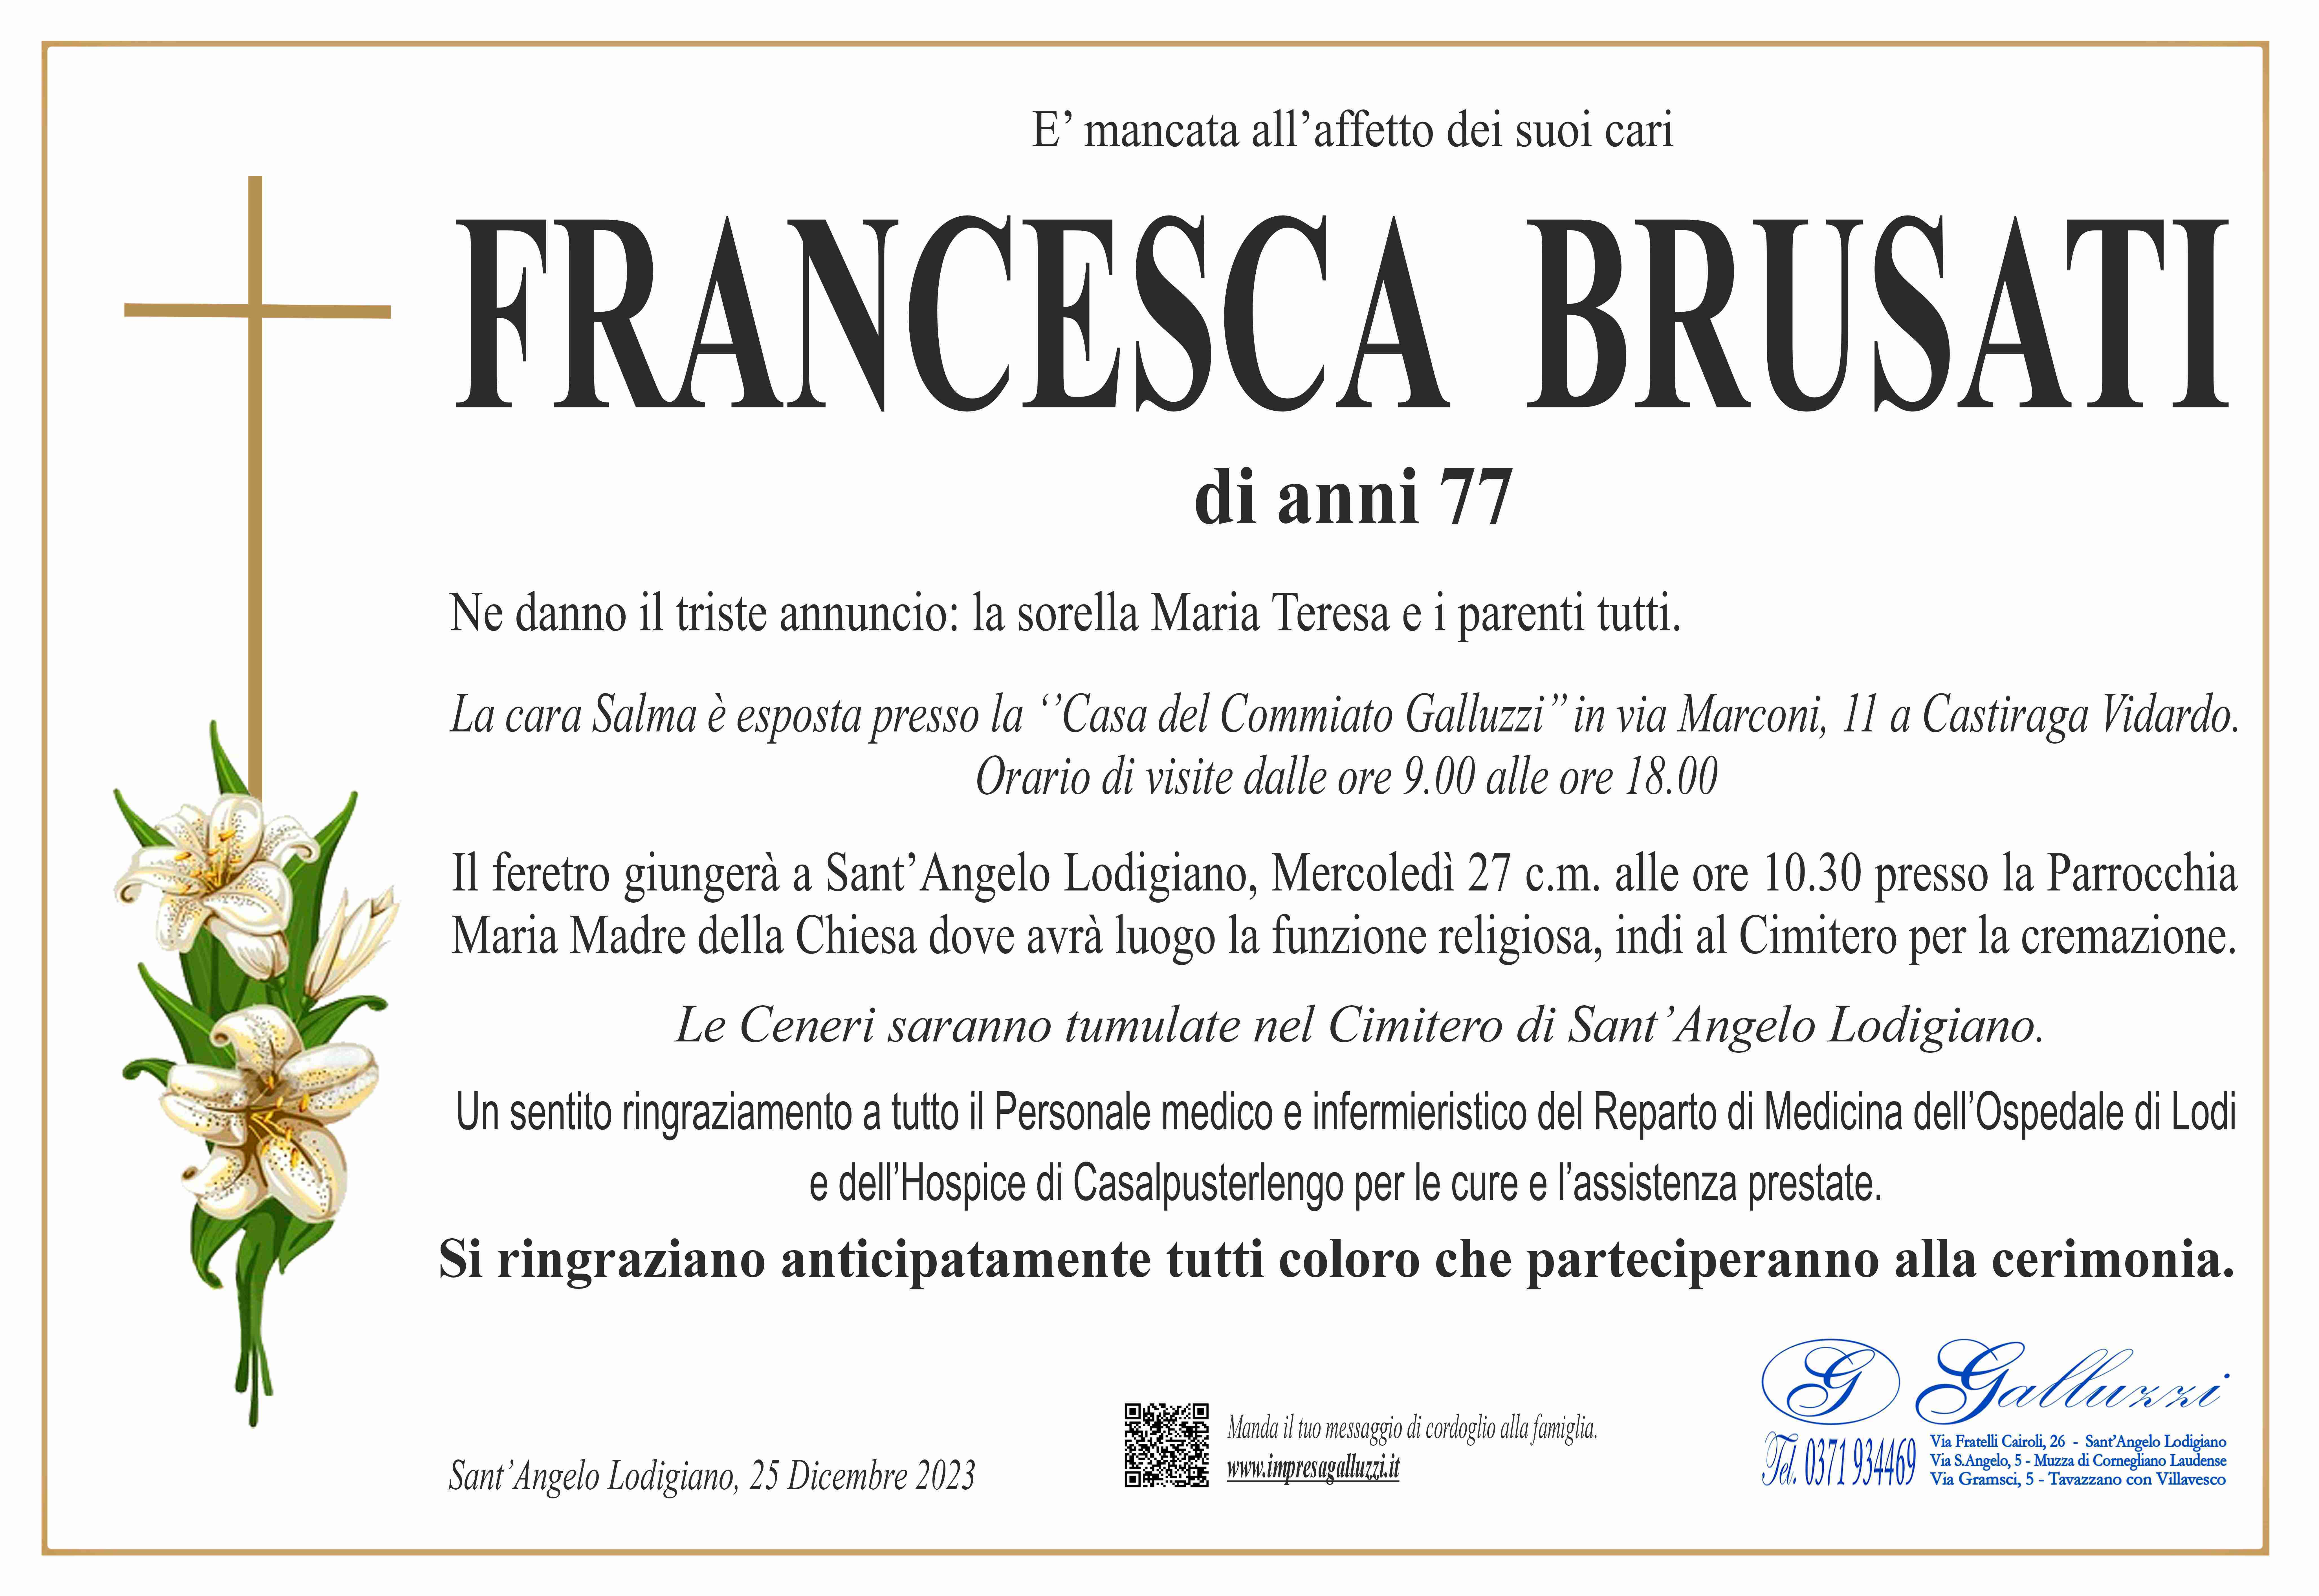 Francesca Brusati